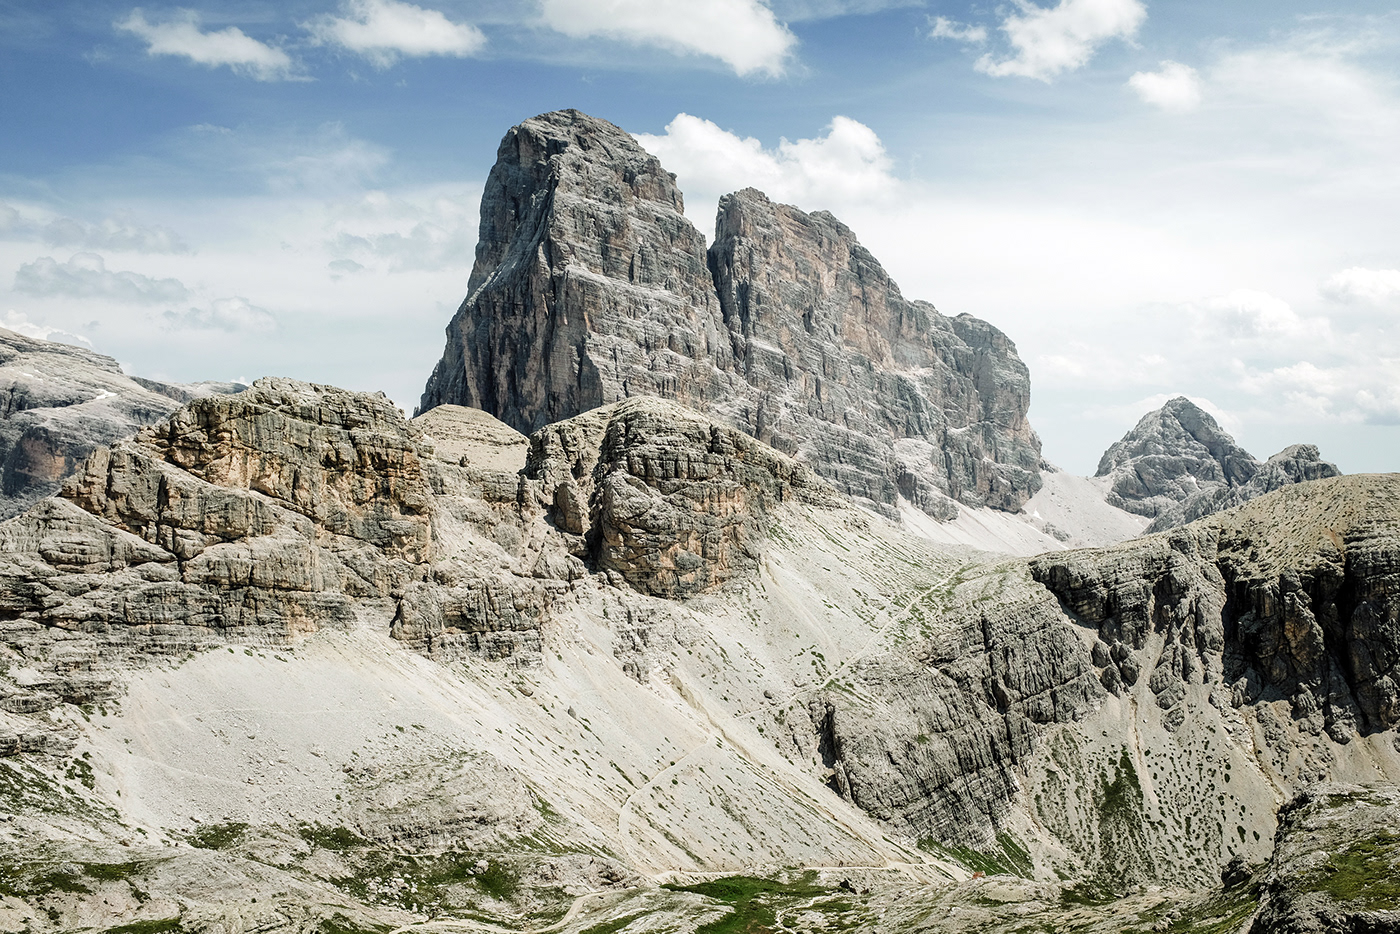 Landscape mountains hiking Nature Photography  dolomites Italy Outdoor scenery fujifilm